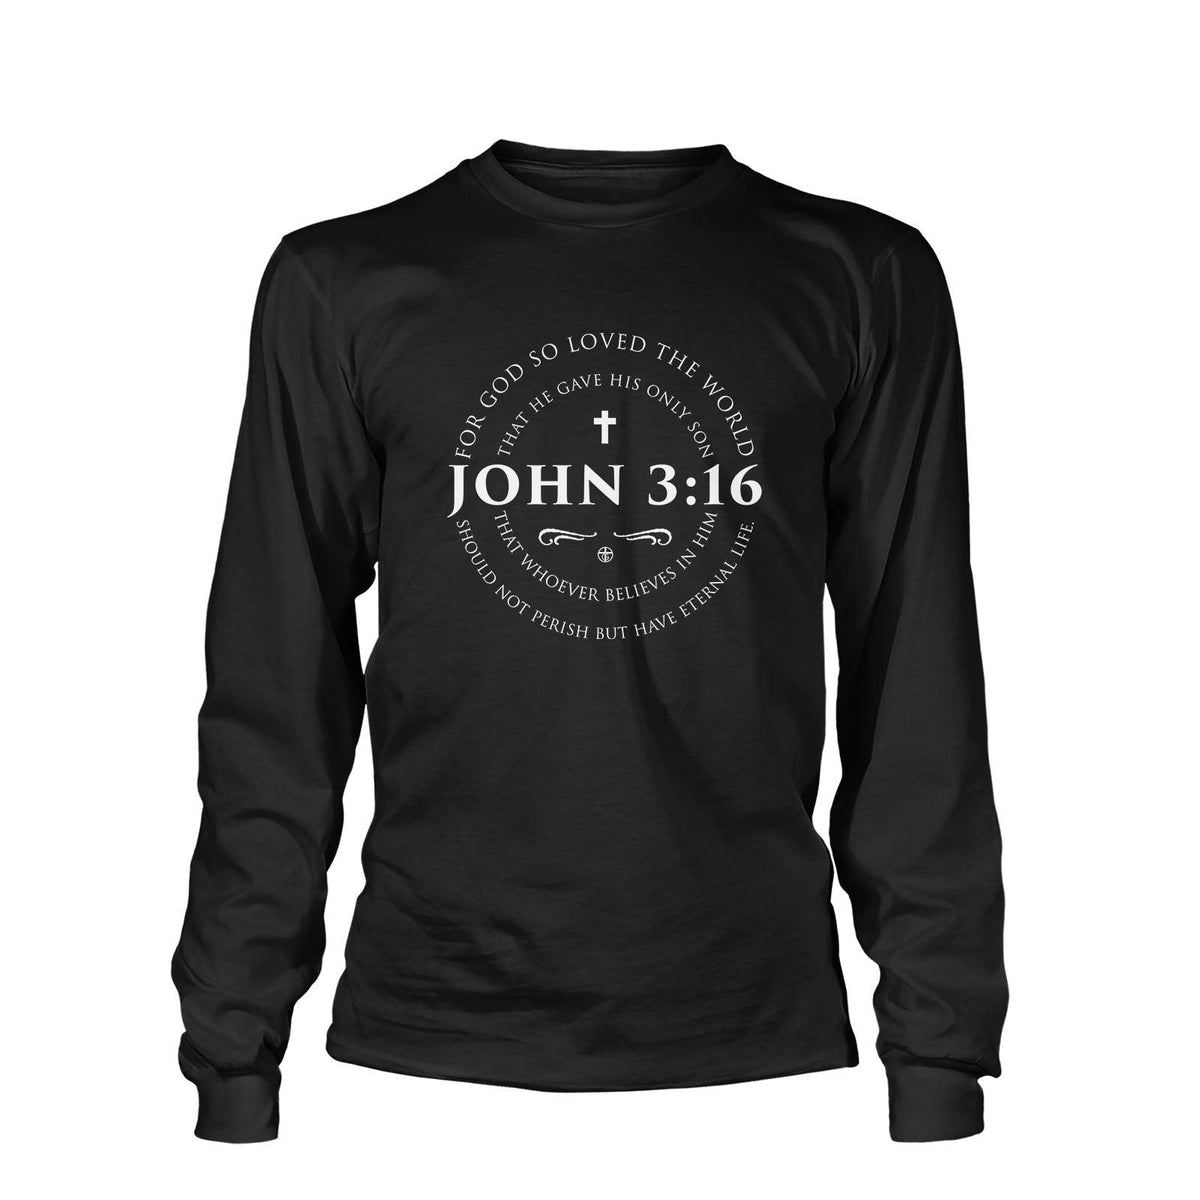 John 3:16 Long Sleeves